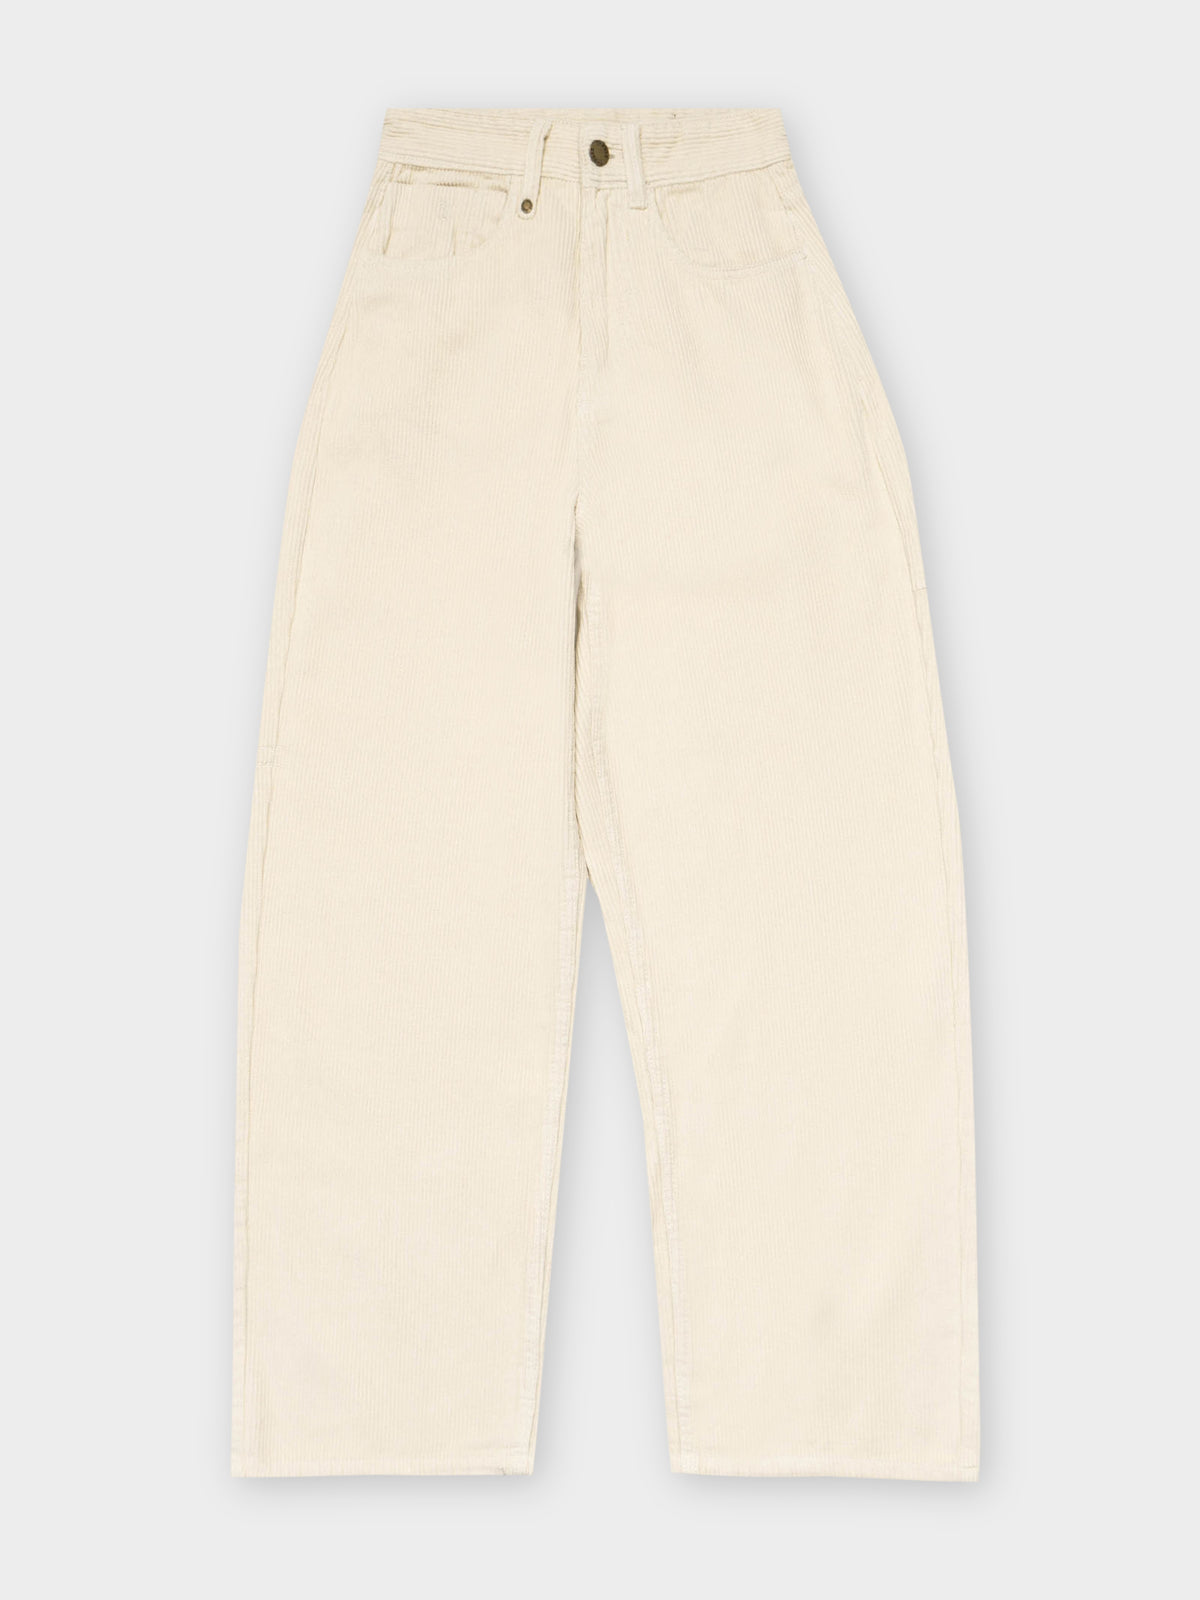 Billie Jean Cord Pants in Heritage White